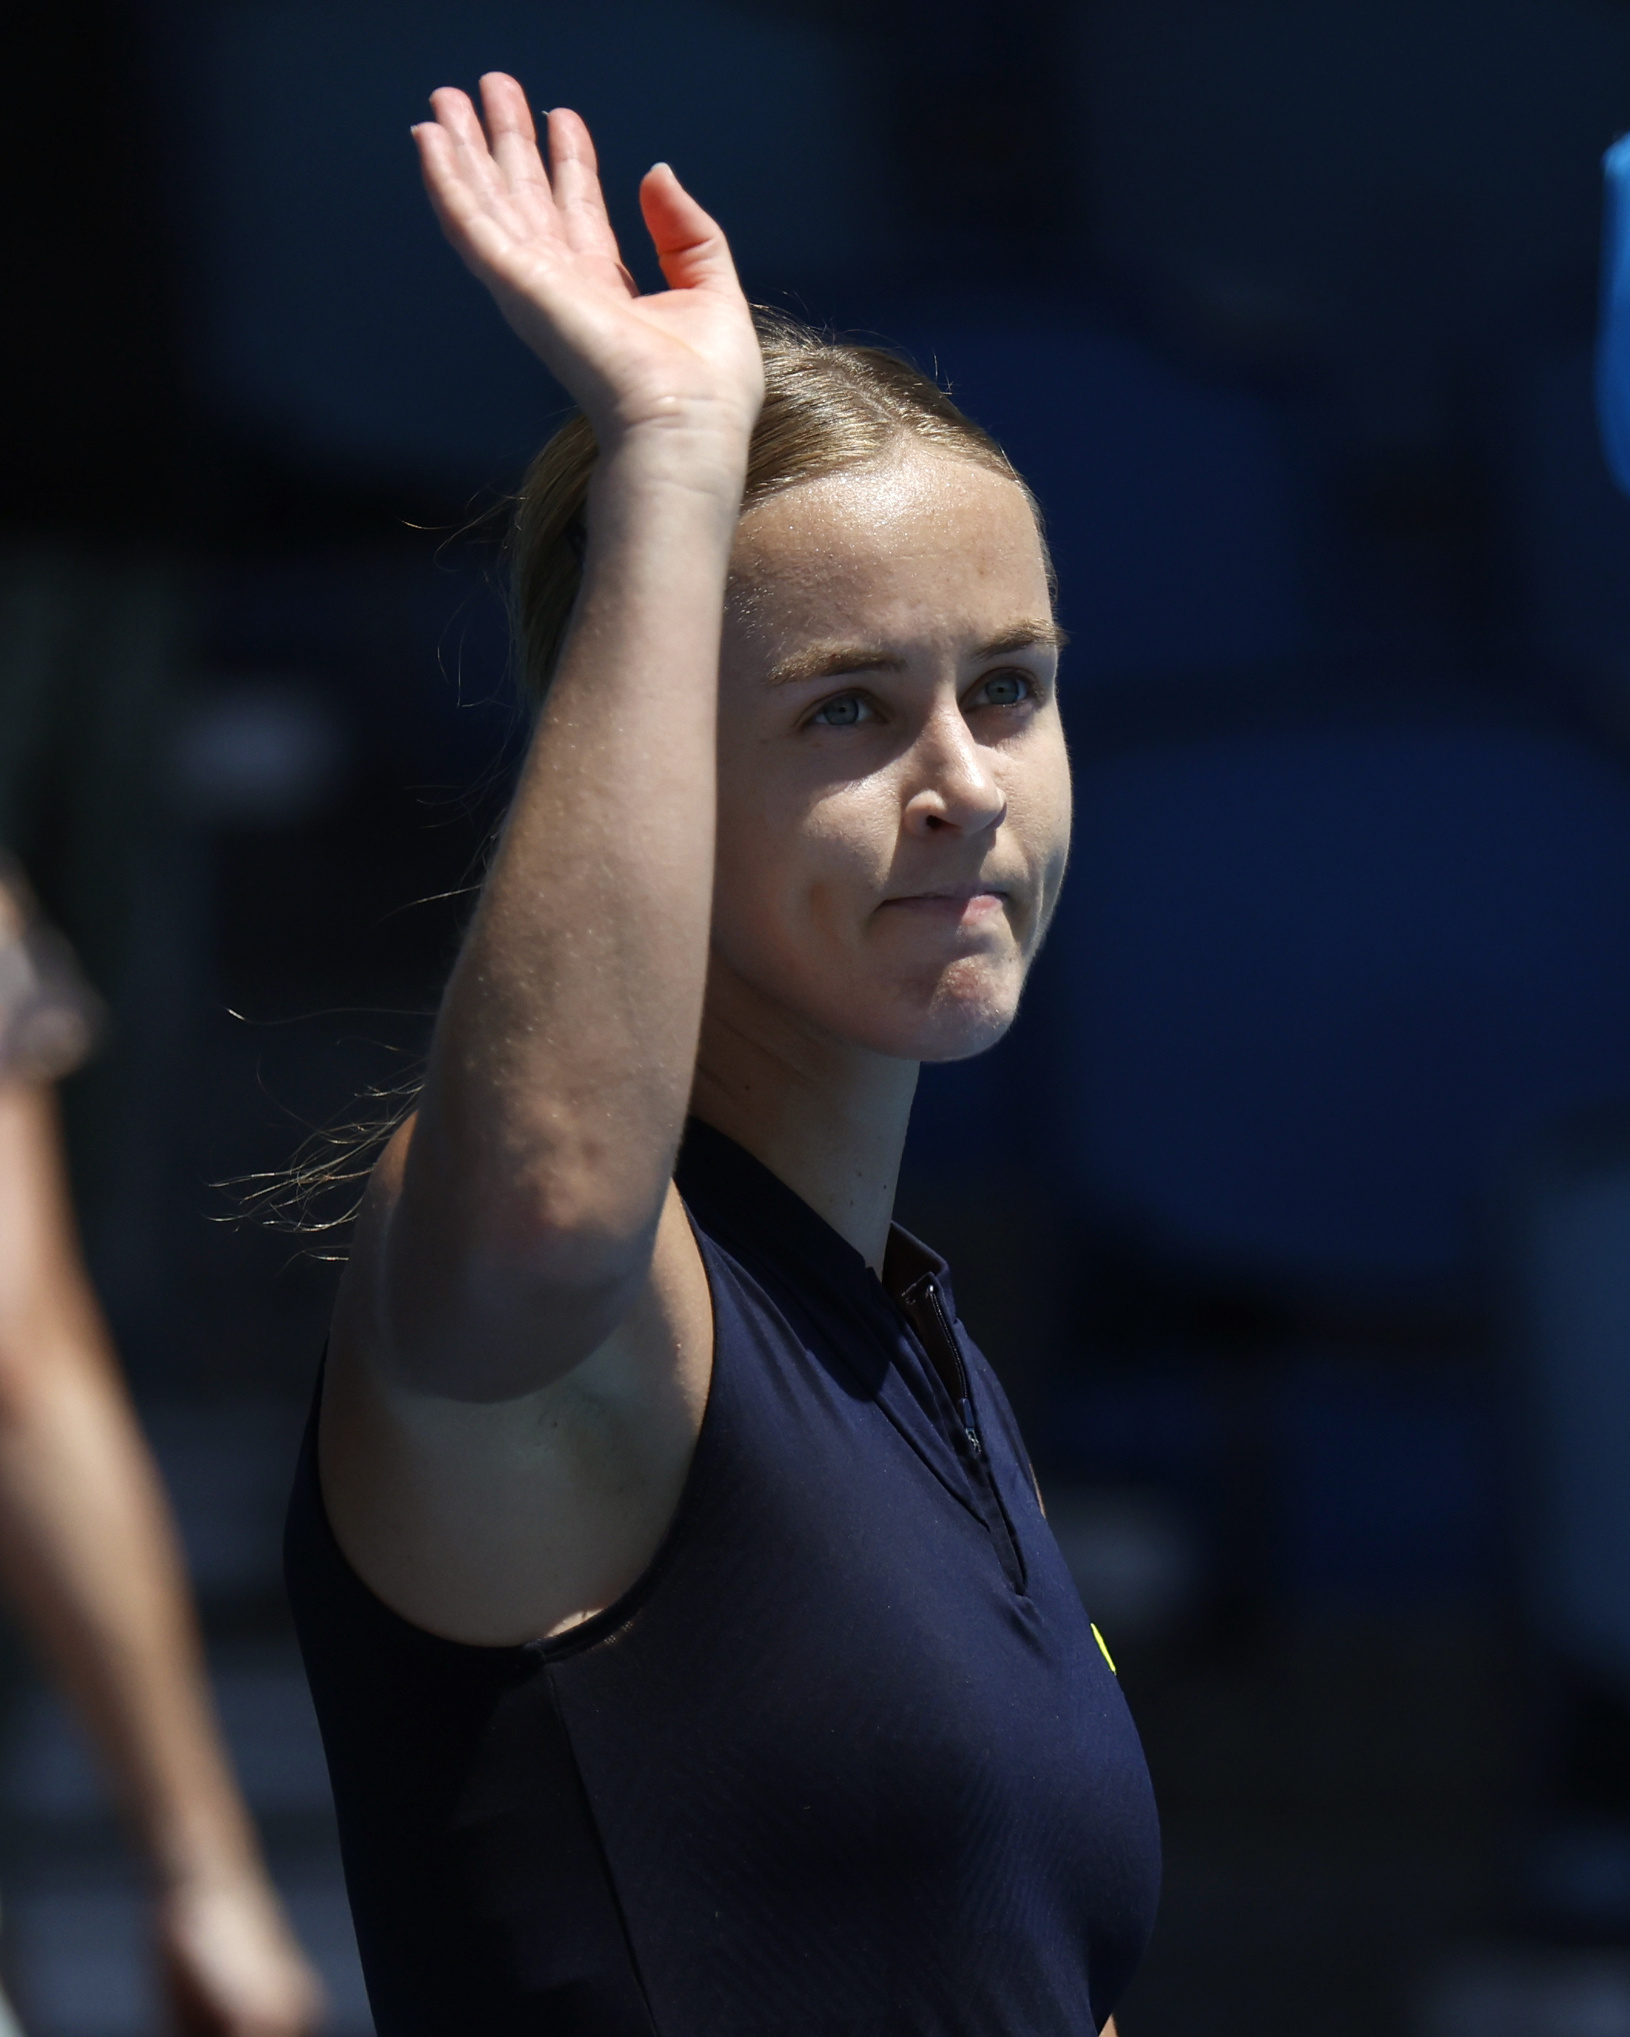 Slovenská tenistka Anna Karolína